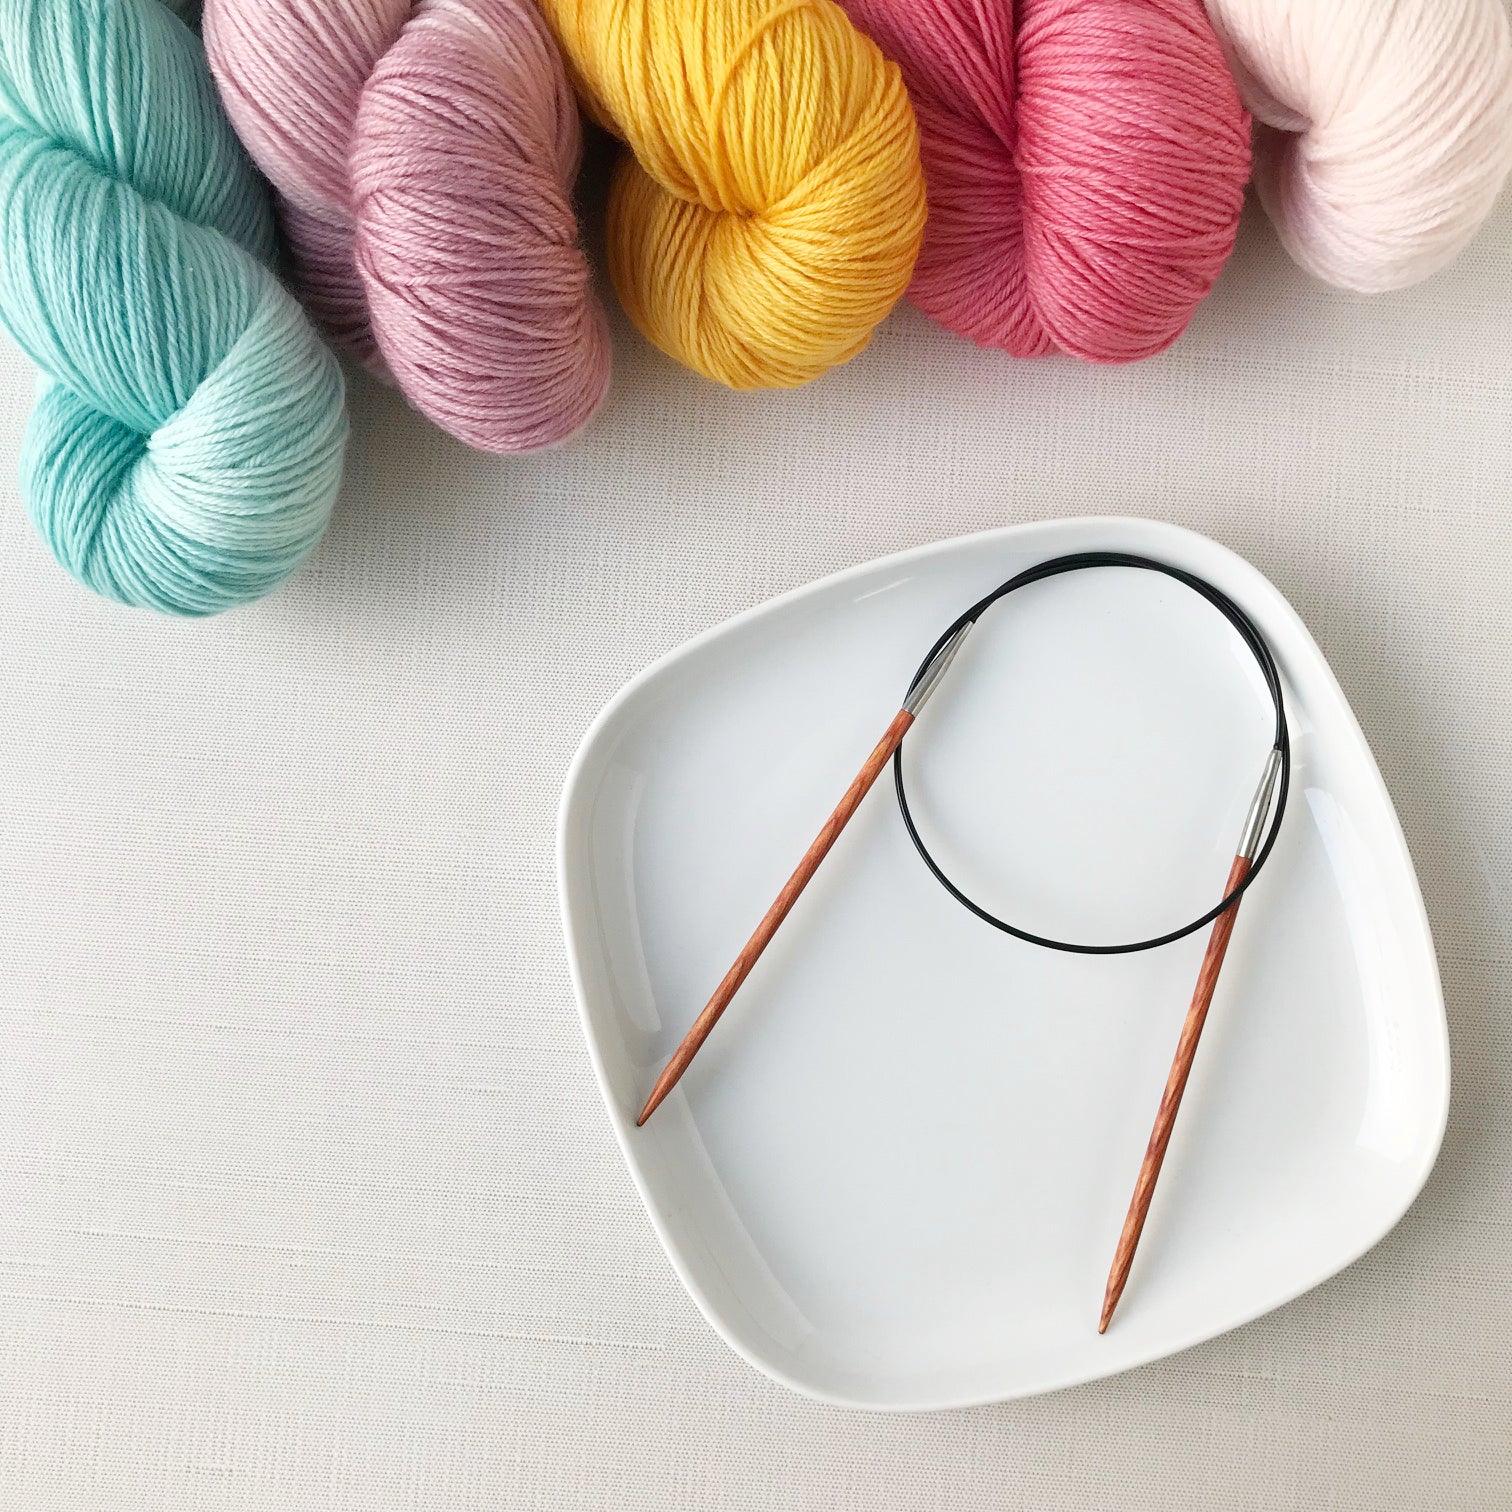 Knitter's Pride Dreamz 40 Circular Needles - Loop, Knitting